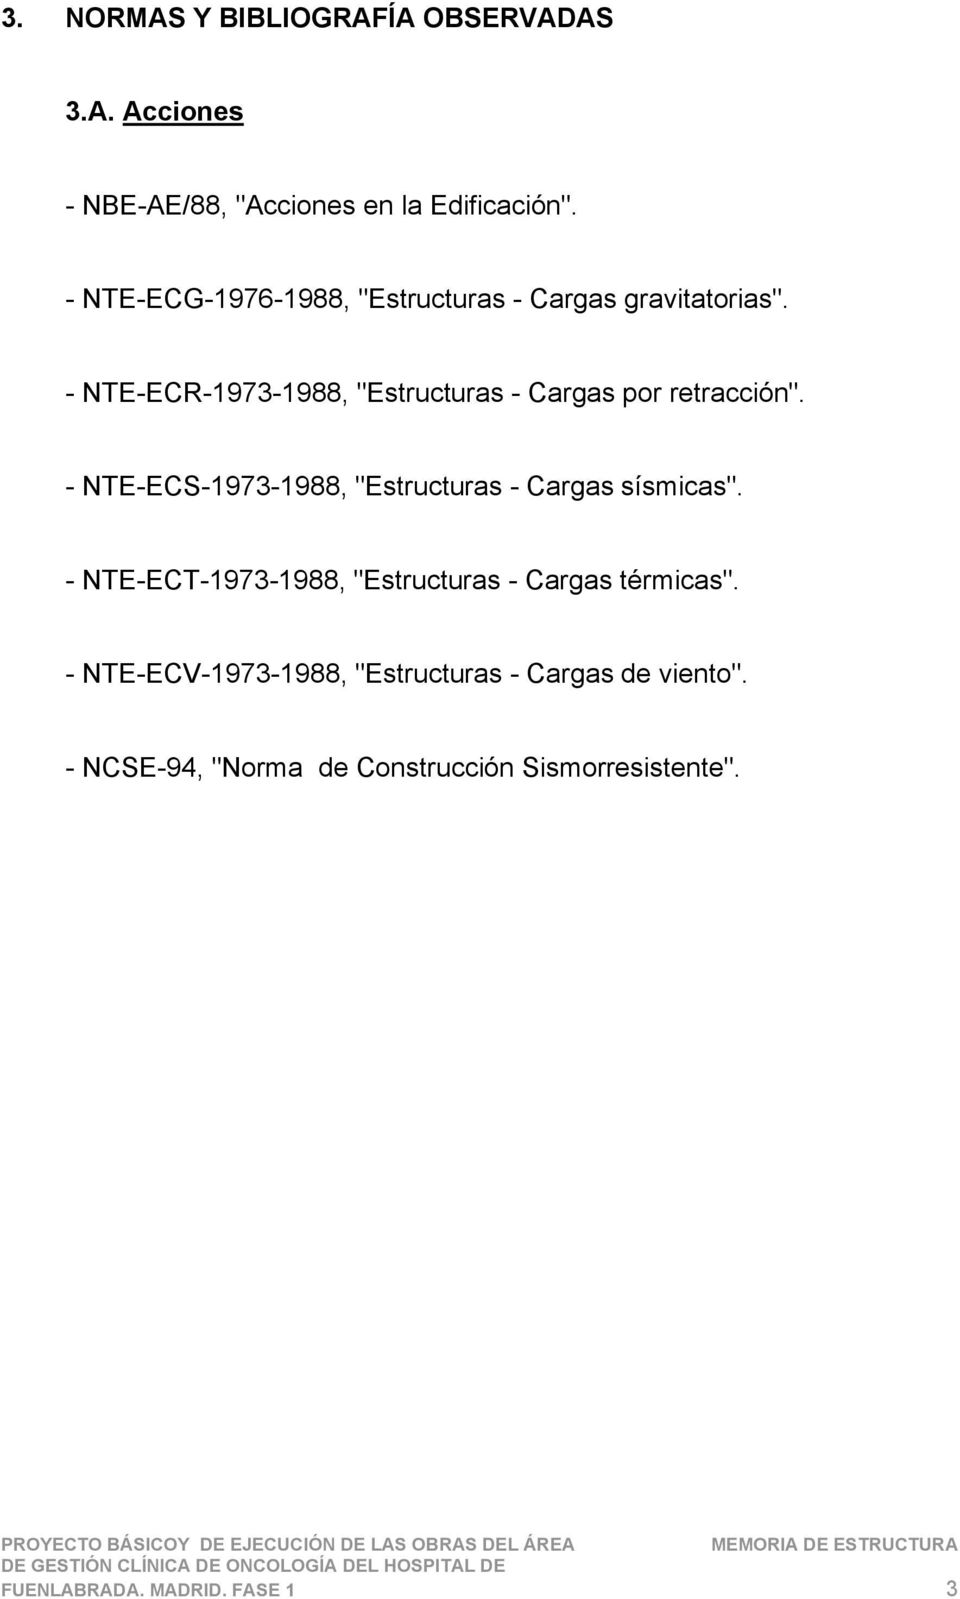 - NTE-ECR-1973-1988, "Estructuras - Cargas por retracción". - NTE-ECS-1973-1988, "Estructuras - Cargas sísmicas".